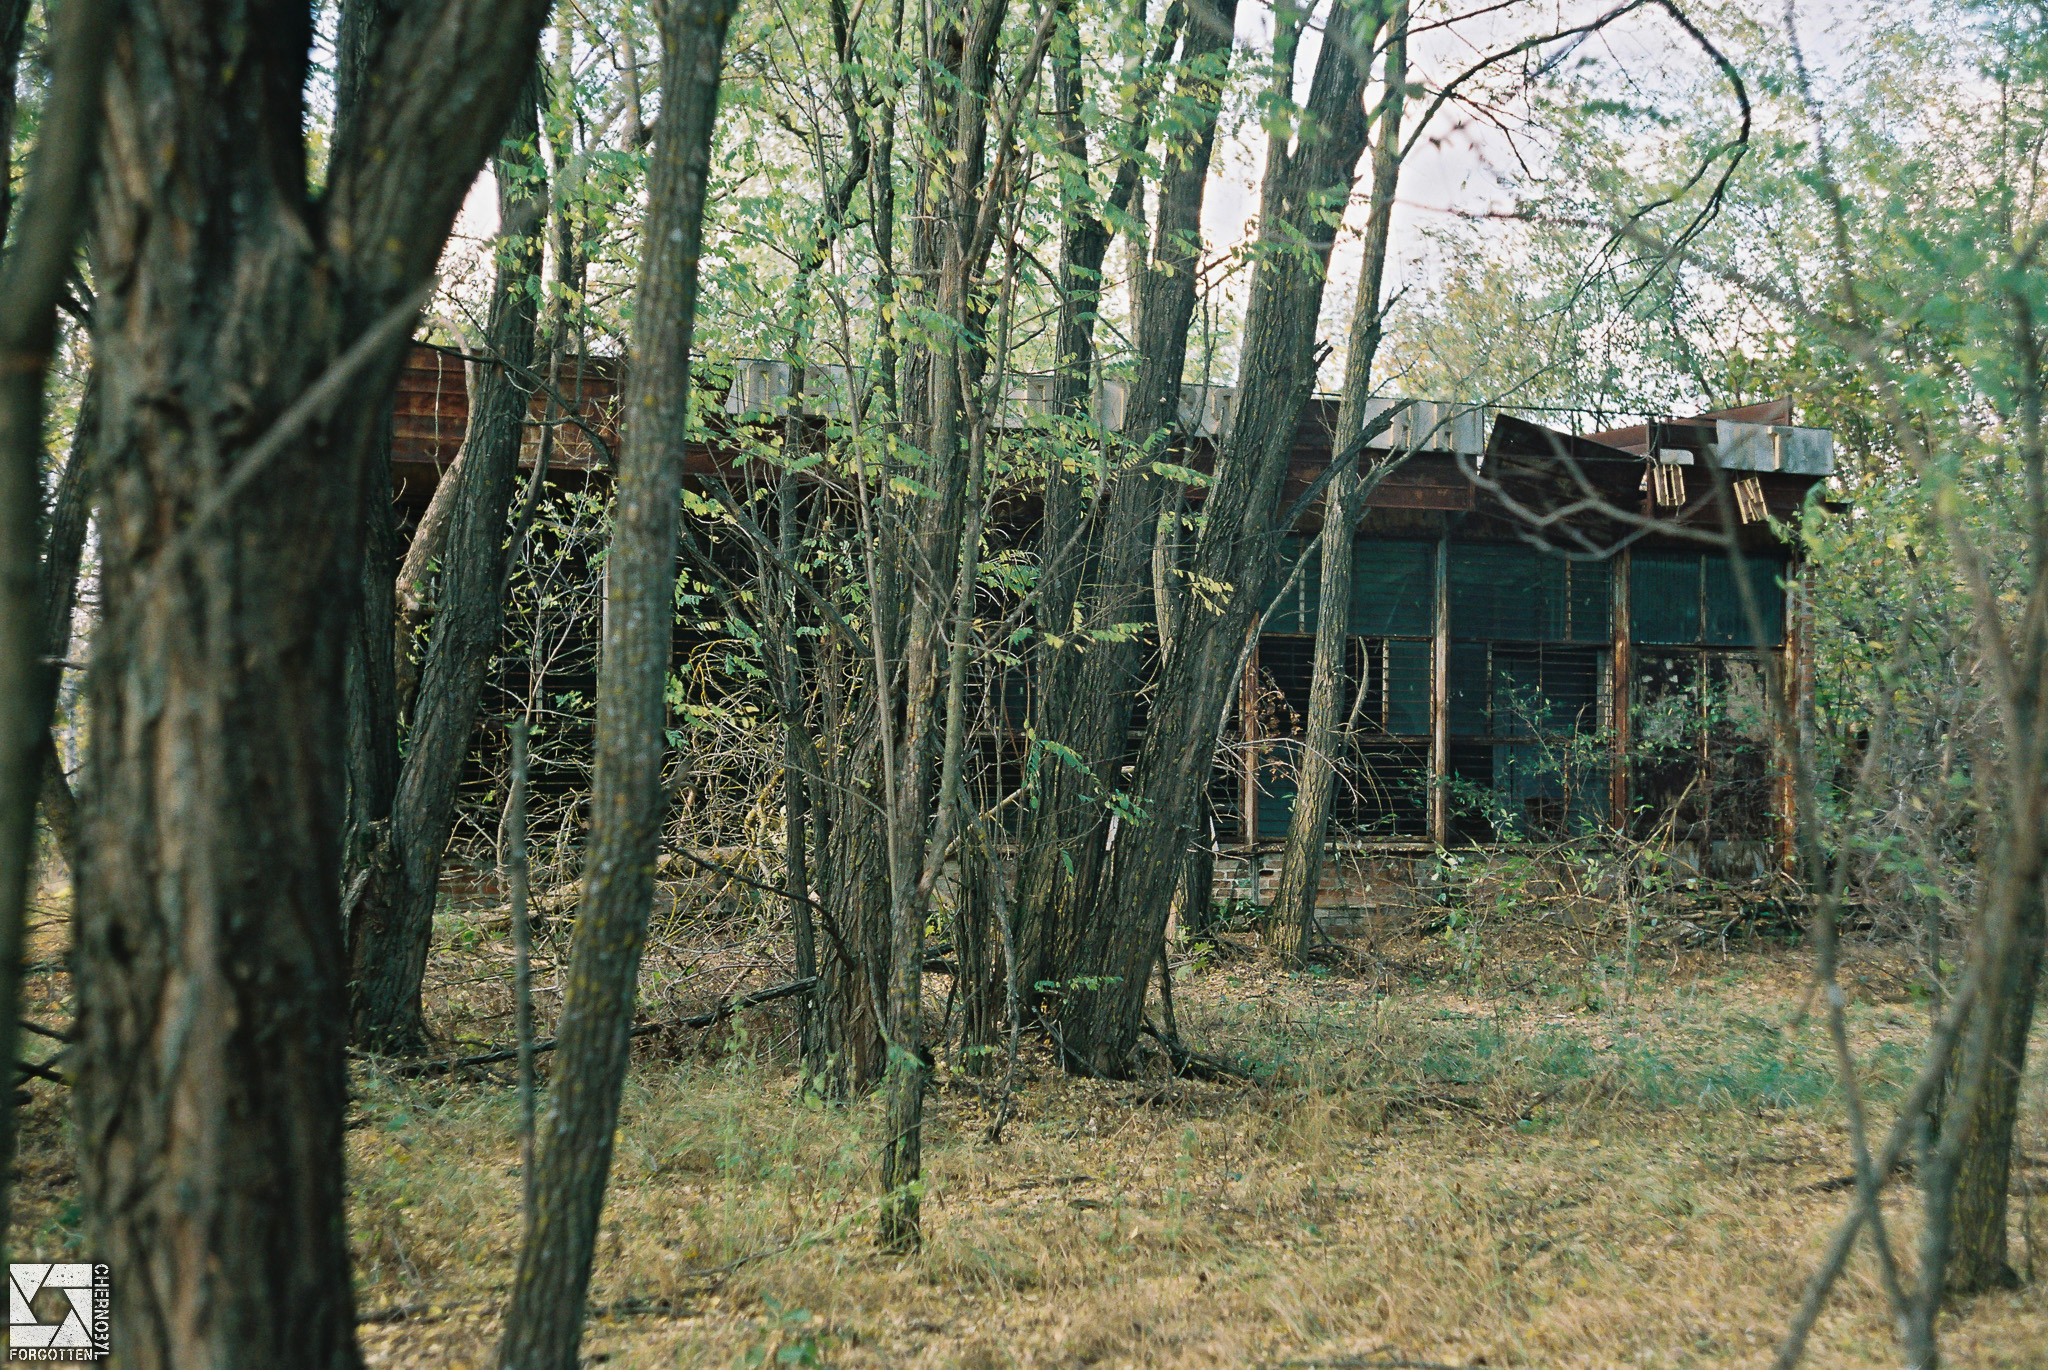 Chernobyl Zone on a 35mm film captured with Kiev 4 camera